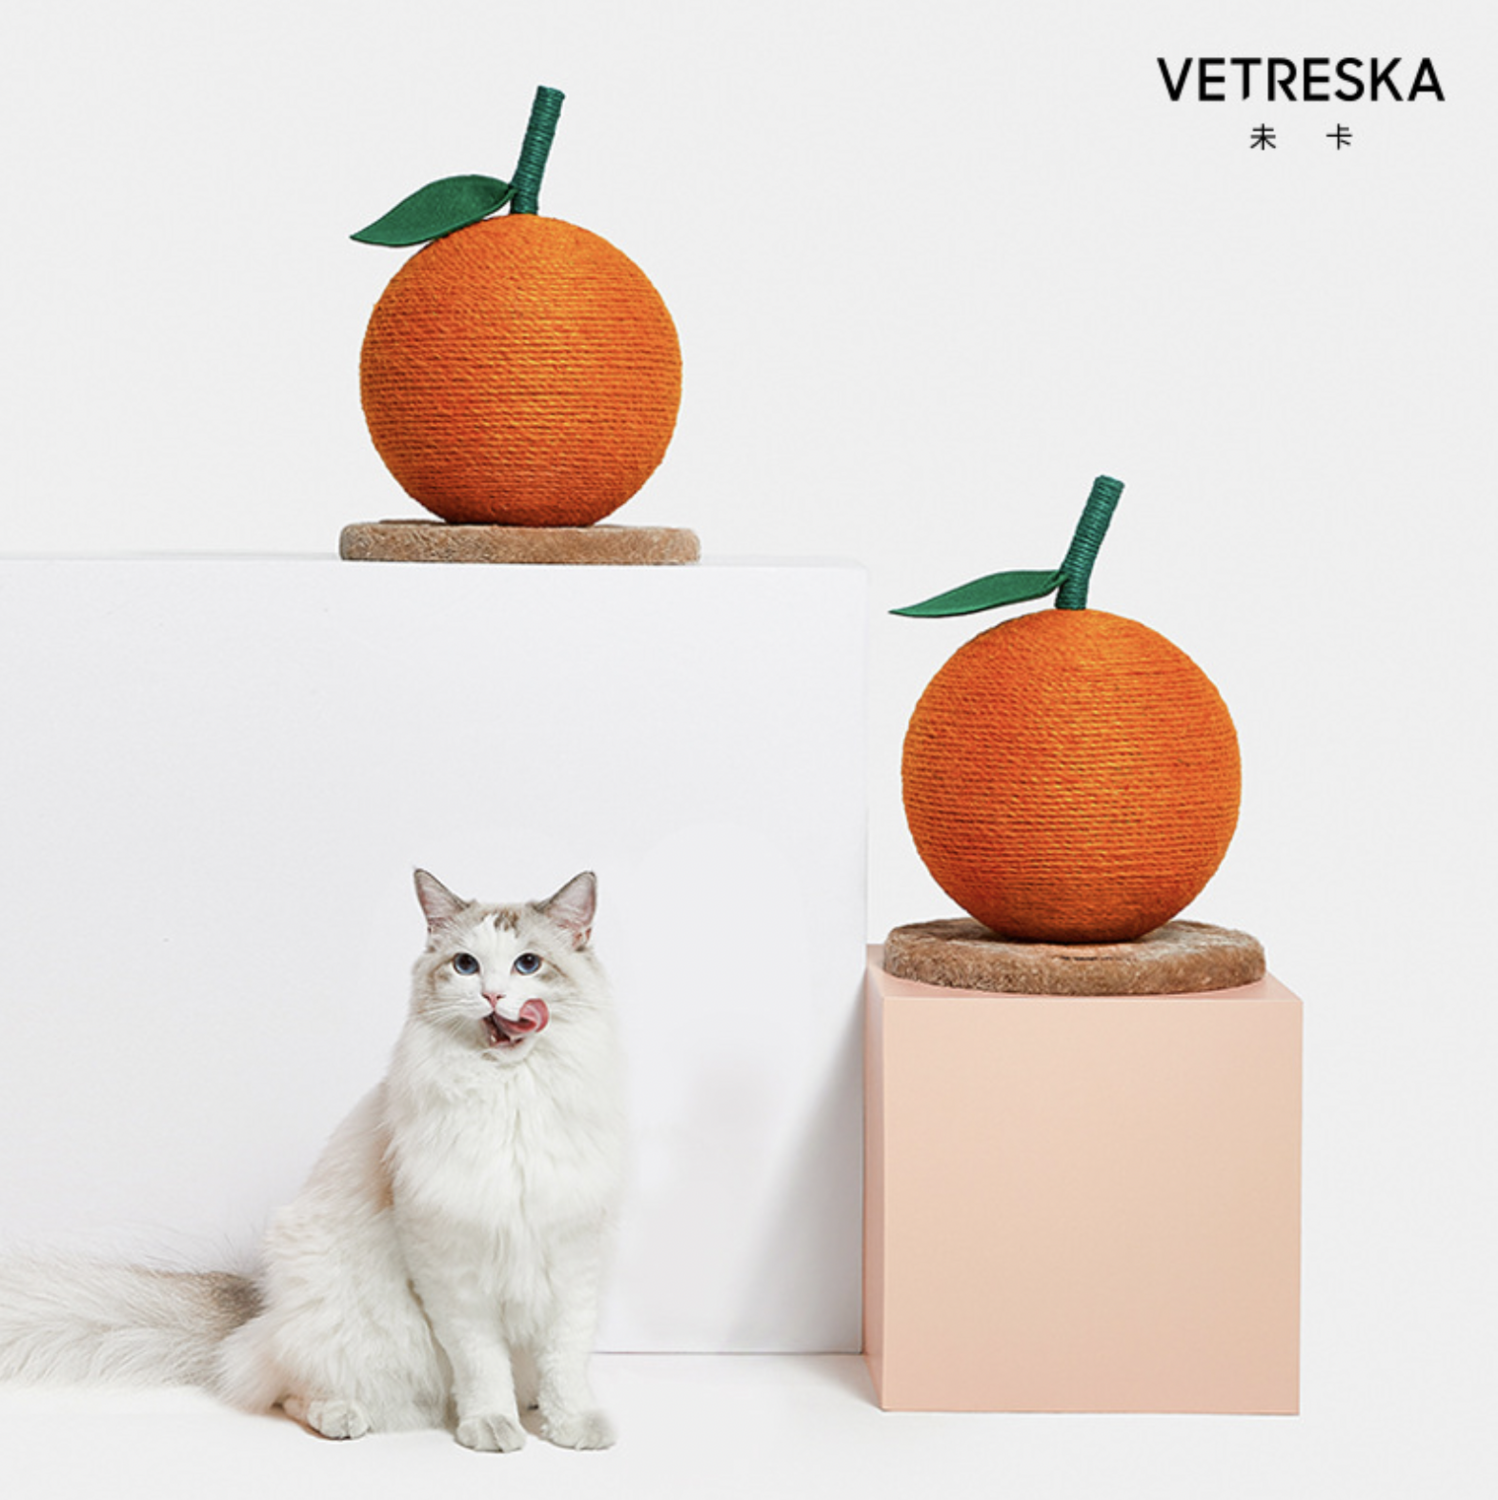 Vetreska Orange Cat Scratch Toy Cat tree - 未卡大橘猫抓板猫树